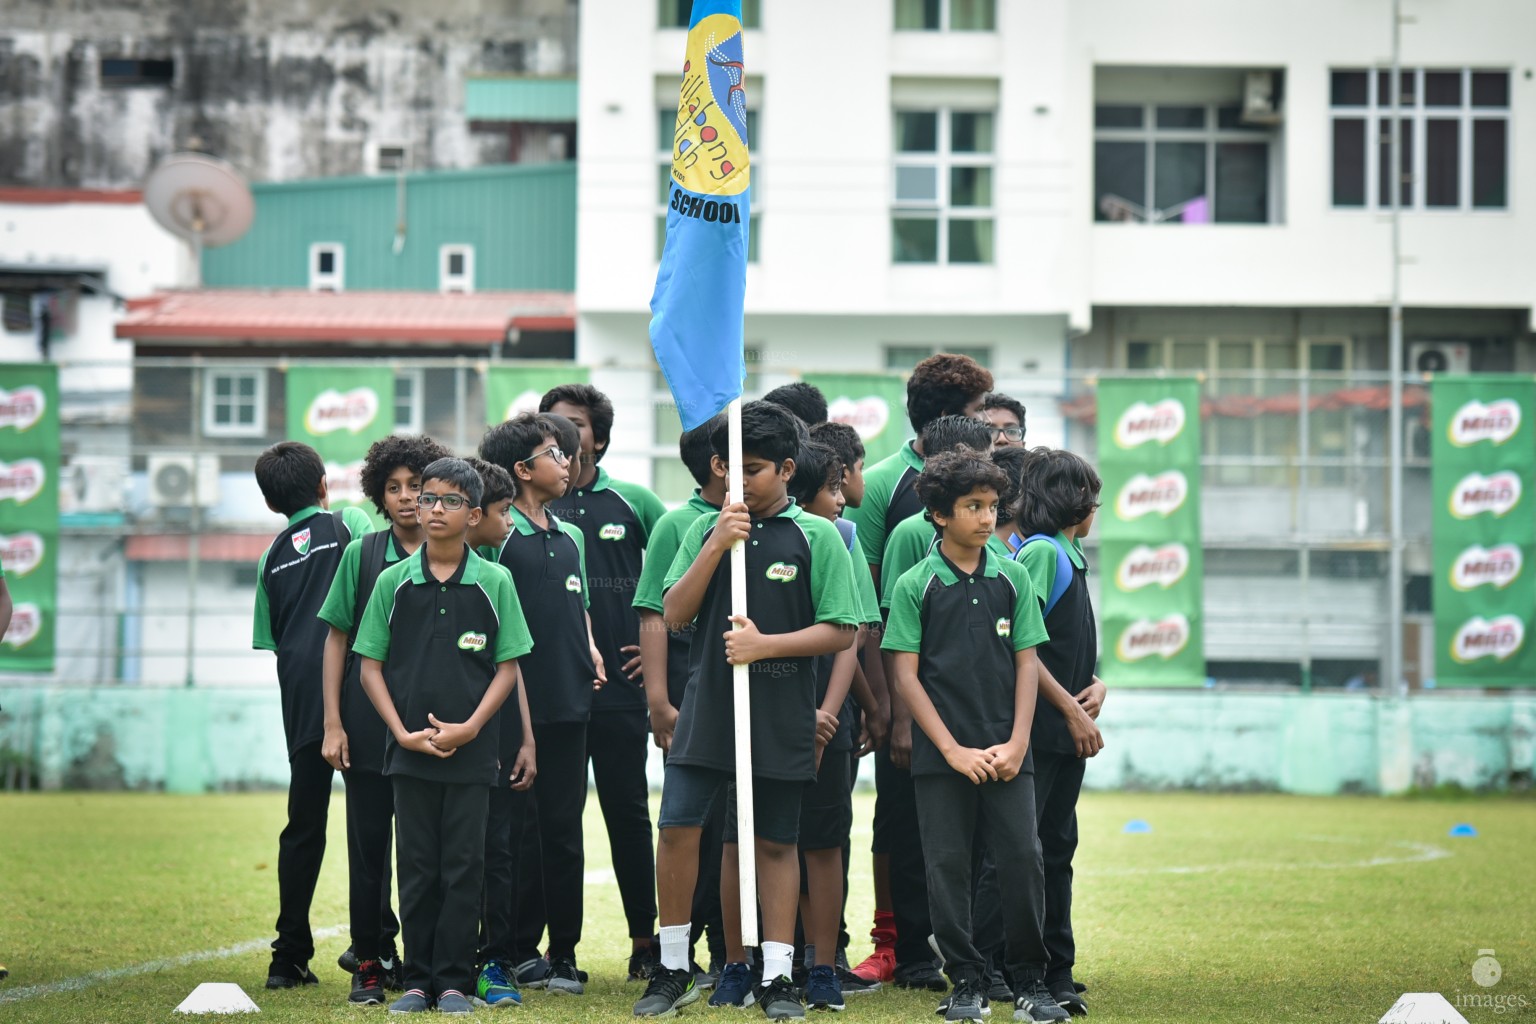 Milo Inter-school Football Tournament / Opening / Under 14 Majeedhiya vs Huraa